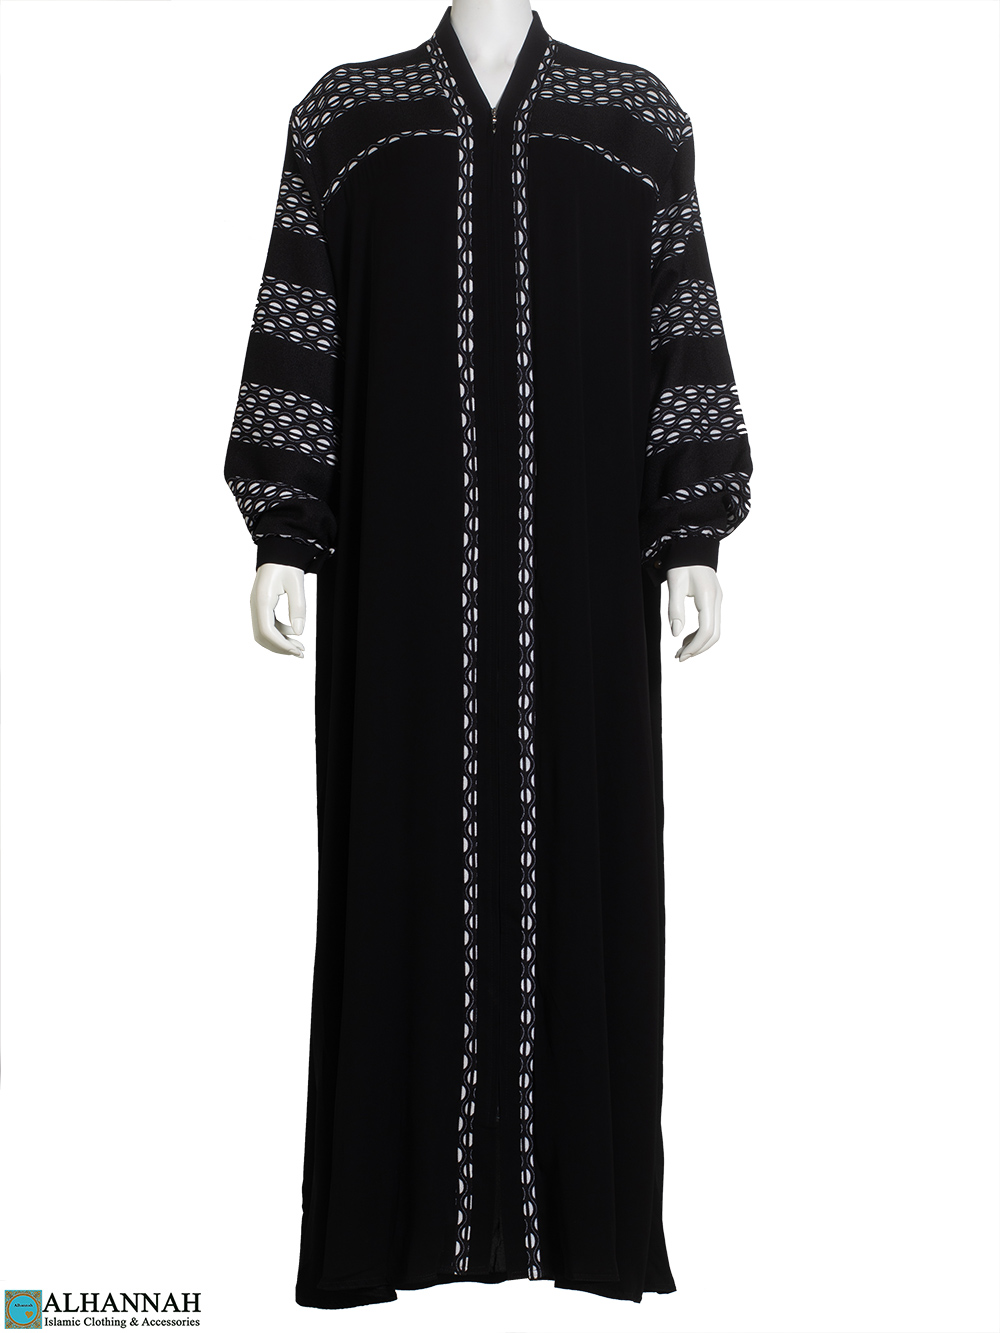 Black & White Abaya | ab887 » Alhannah Islamic Clothing